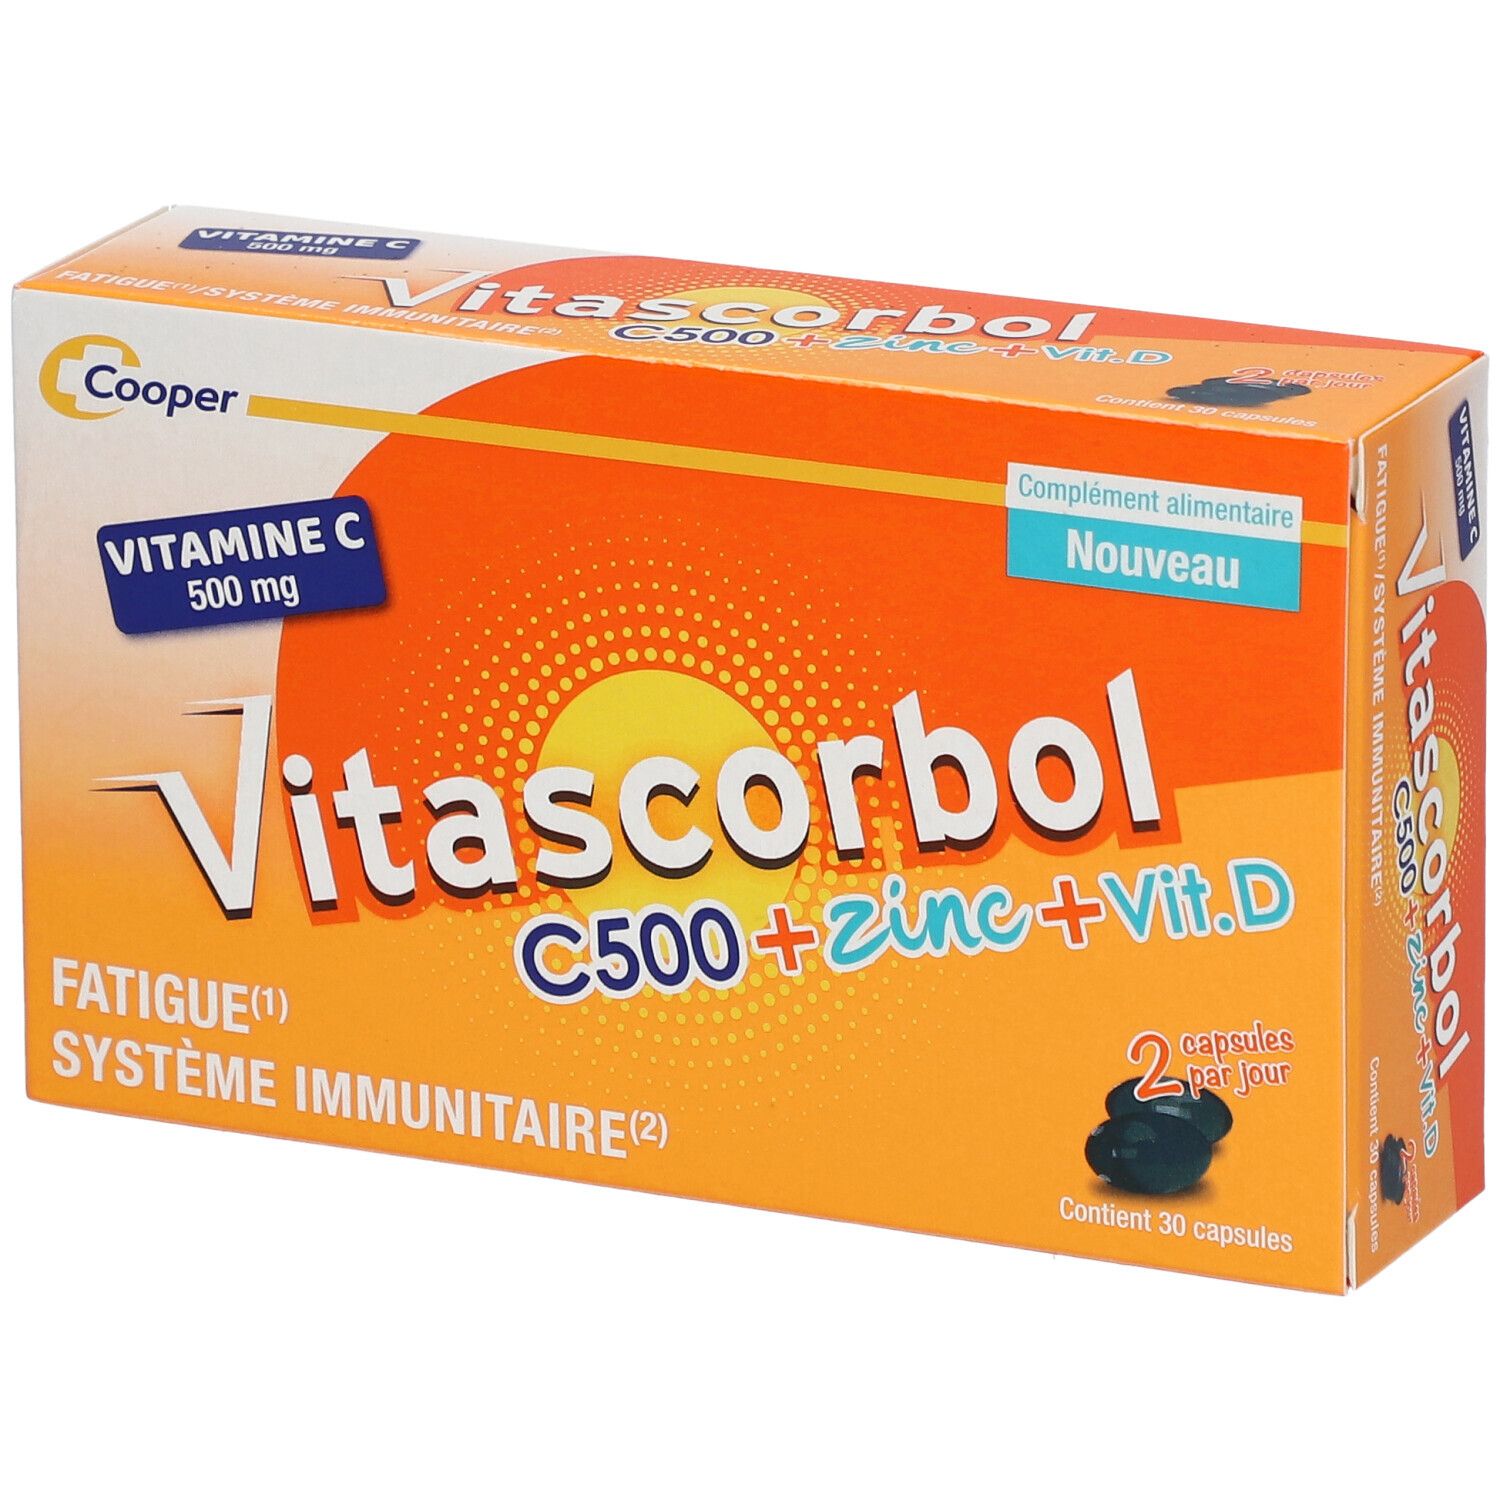 Vitascorbol C500+Zinc+Vit.D